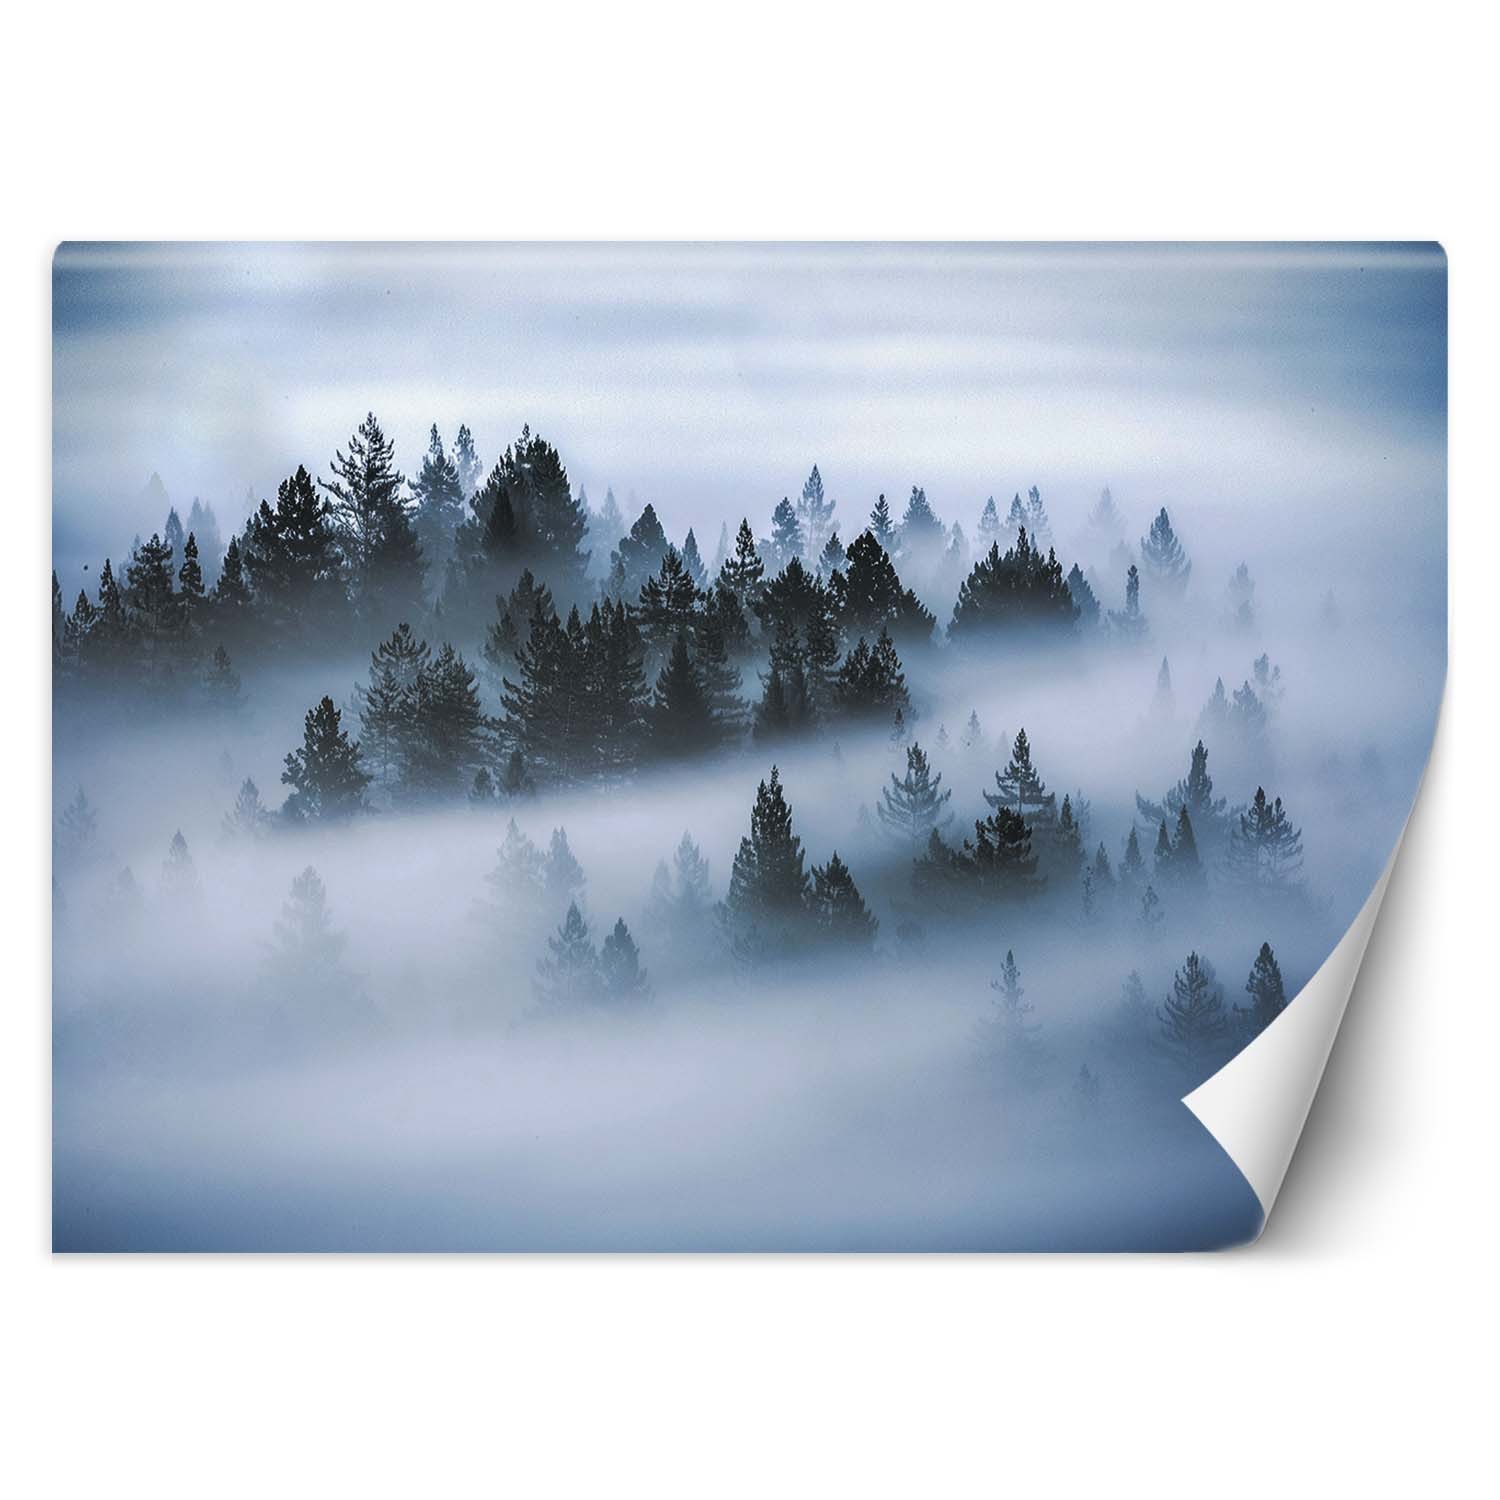 Trend24 – Behang – Mistig Bos – Vliesbehang – Fotobehang Natuur – Behang Woonkamer – 350x245x2 cm – Incl. behanglijm